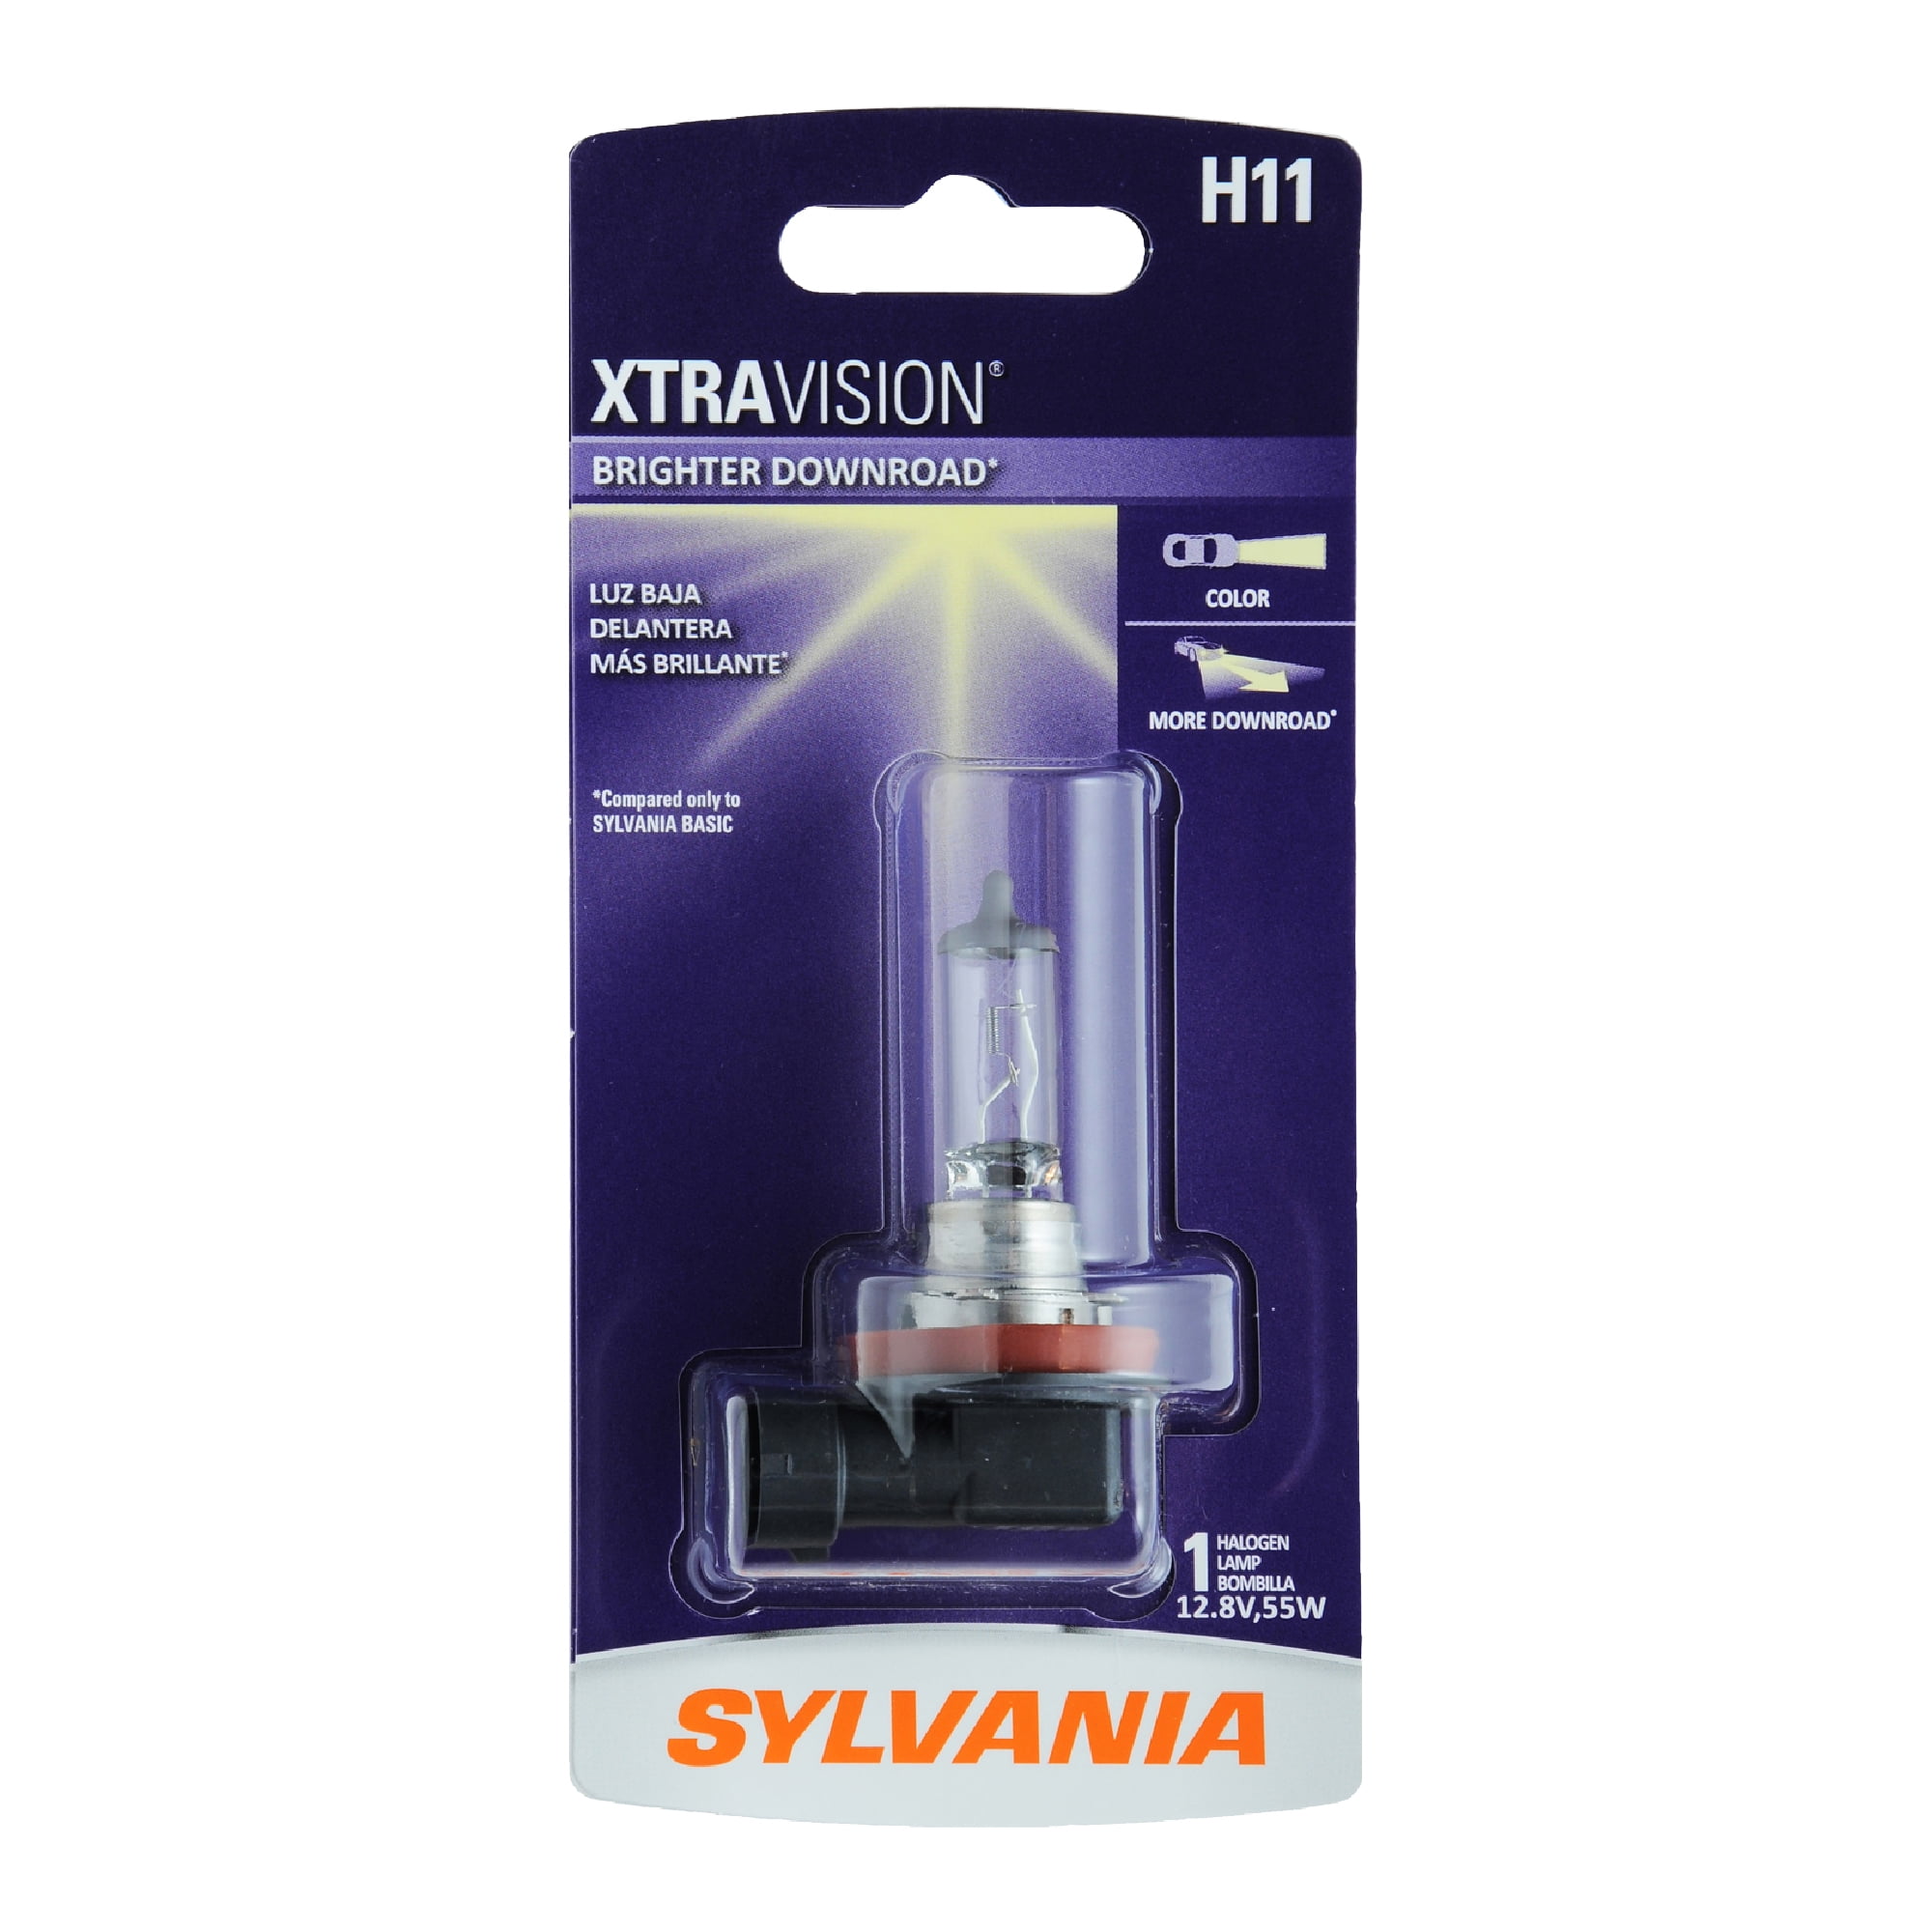 Sylvania H11 XtraVision Halogen Headlight Bulb